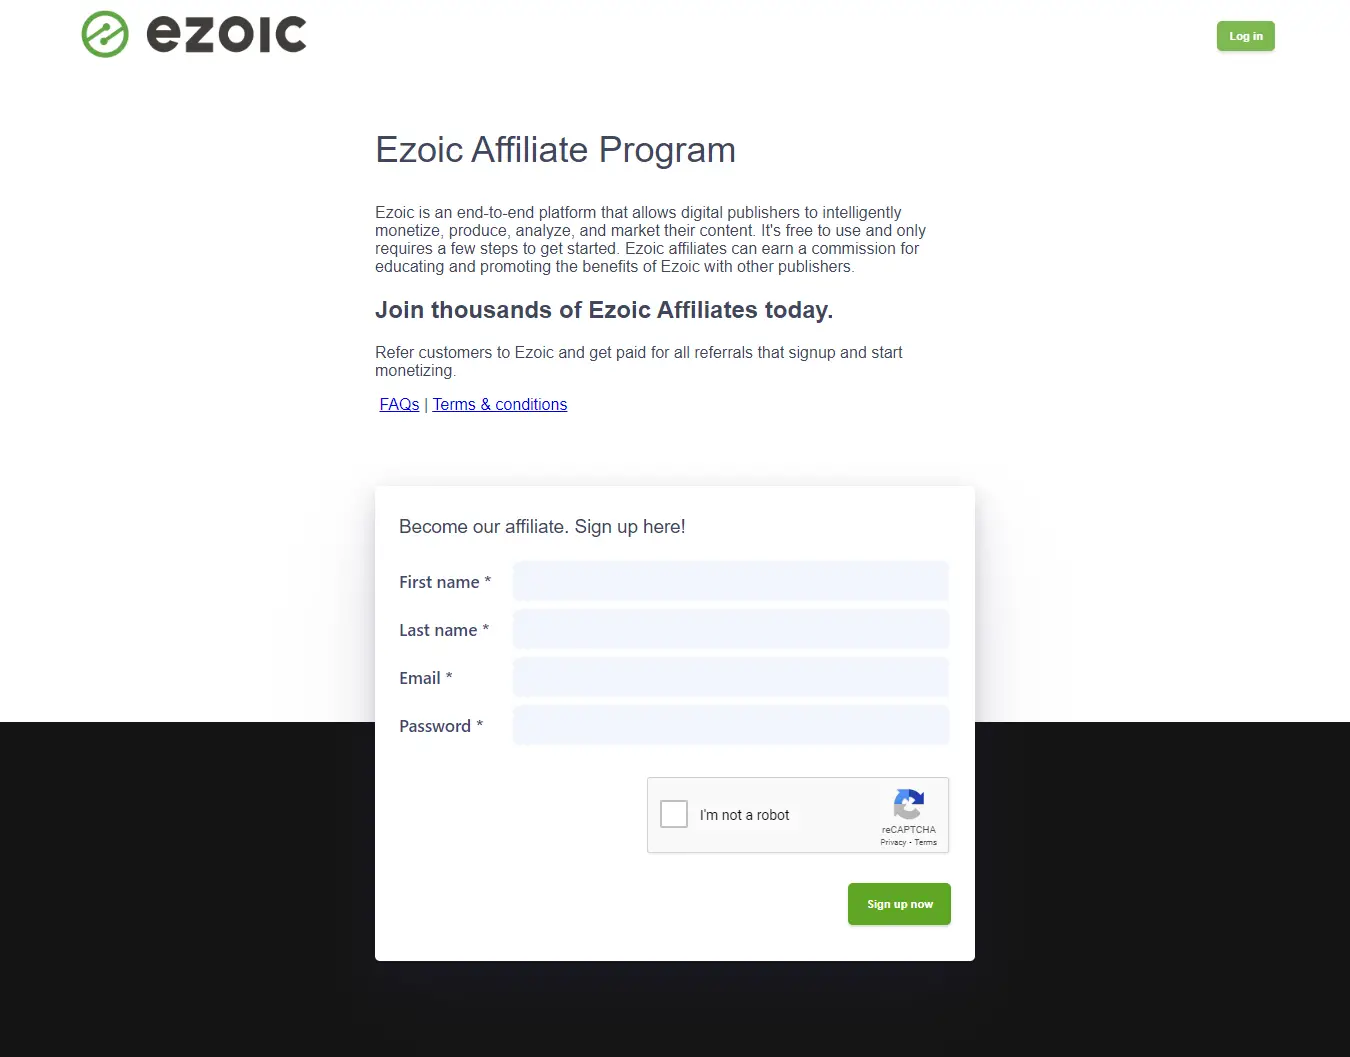 How to join ezoic affiliate program